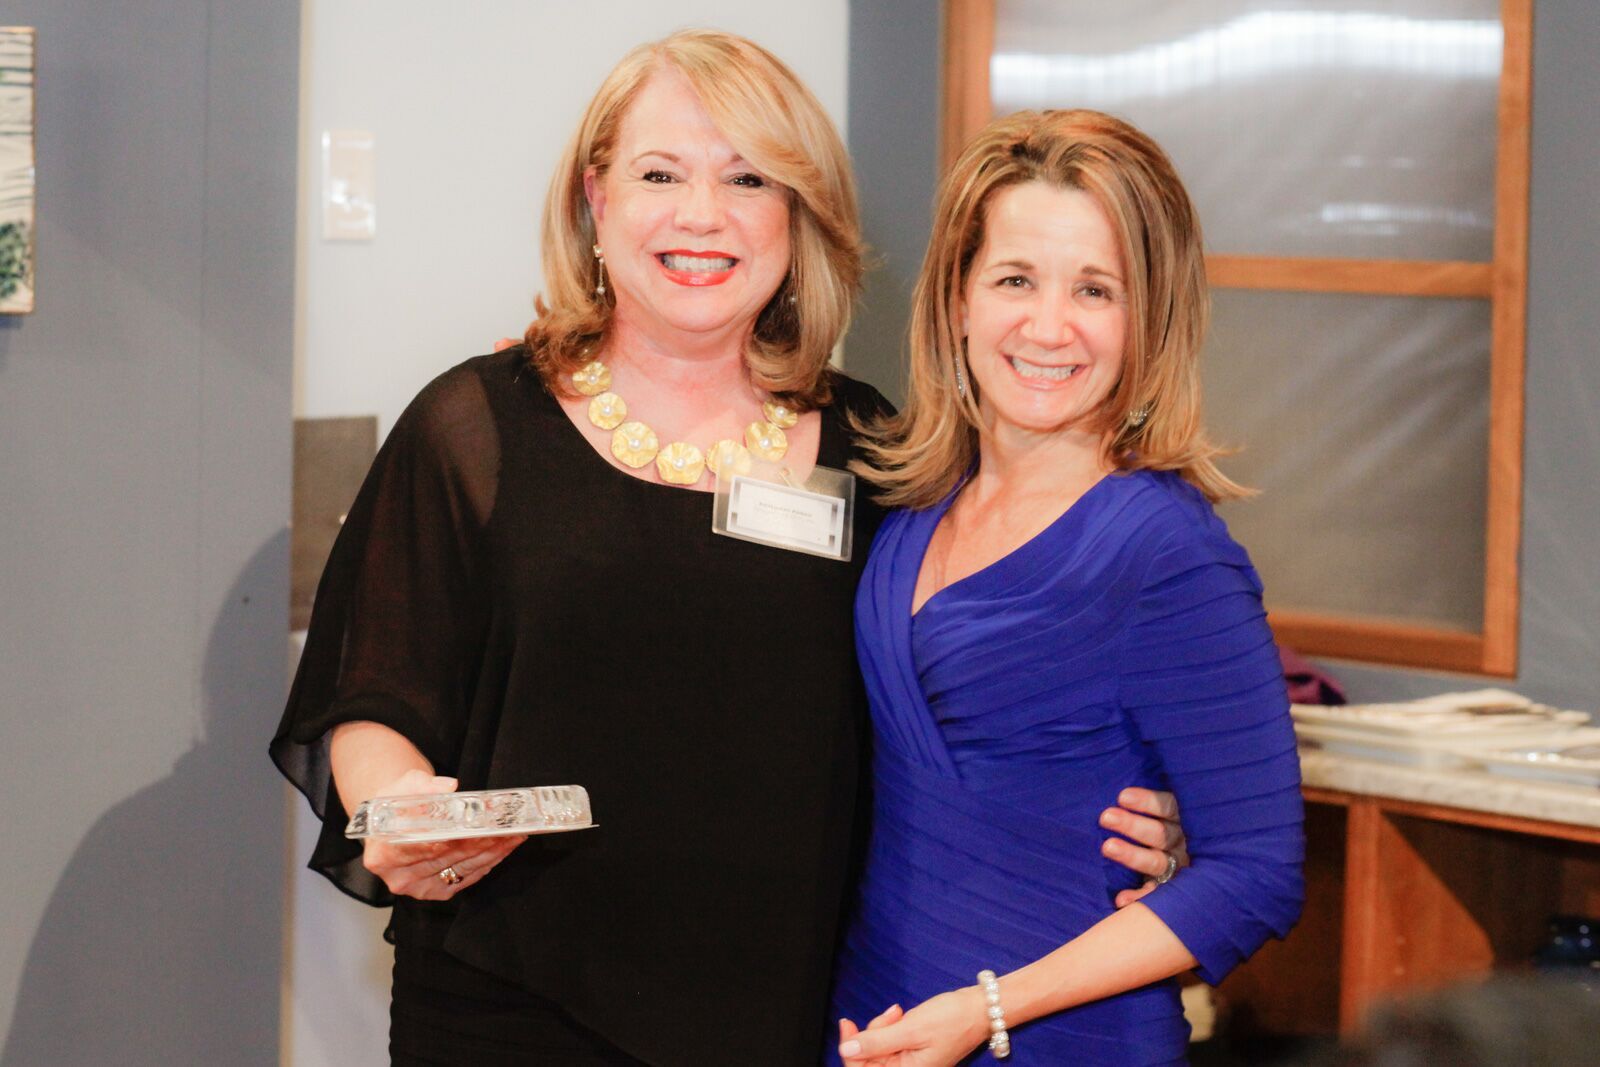 Winning designer Rosemary Porto with Clarke's Debra Burke at "An Evening to Remember" awards.